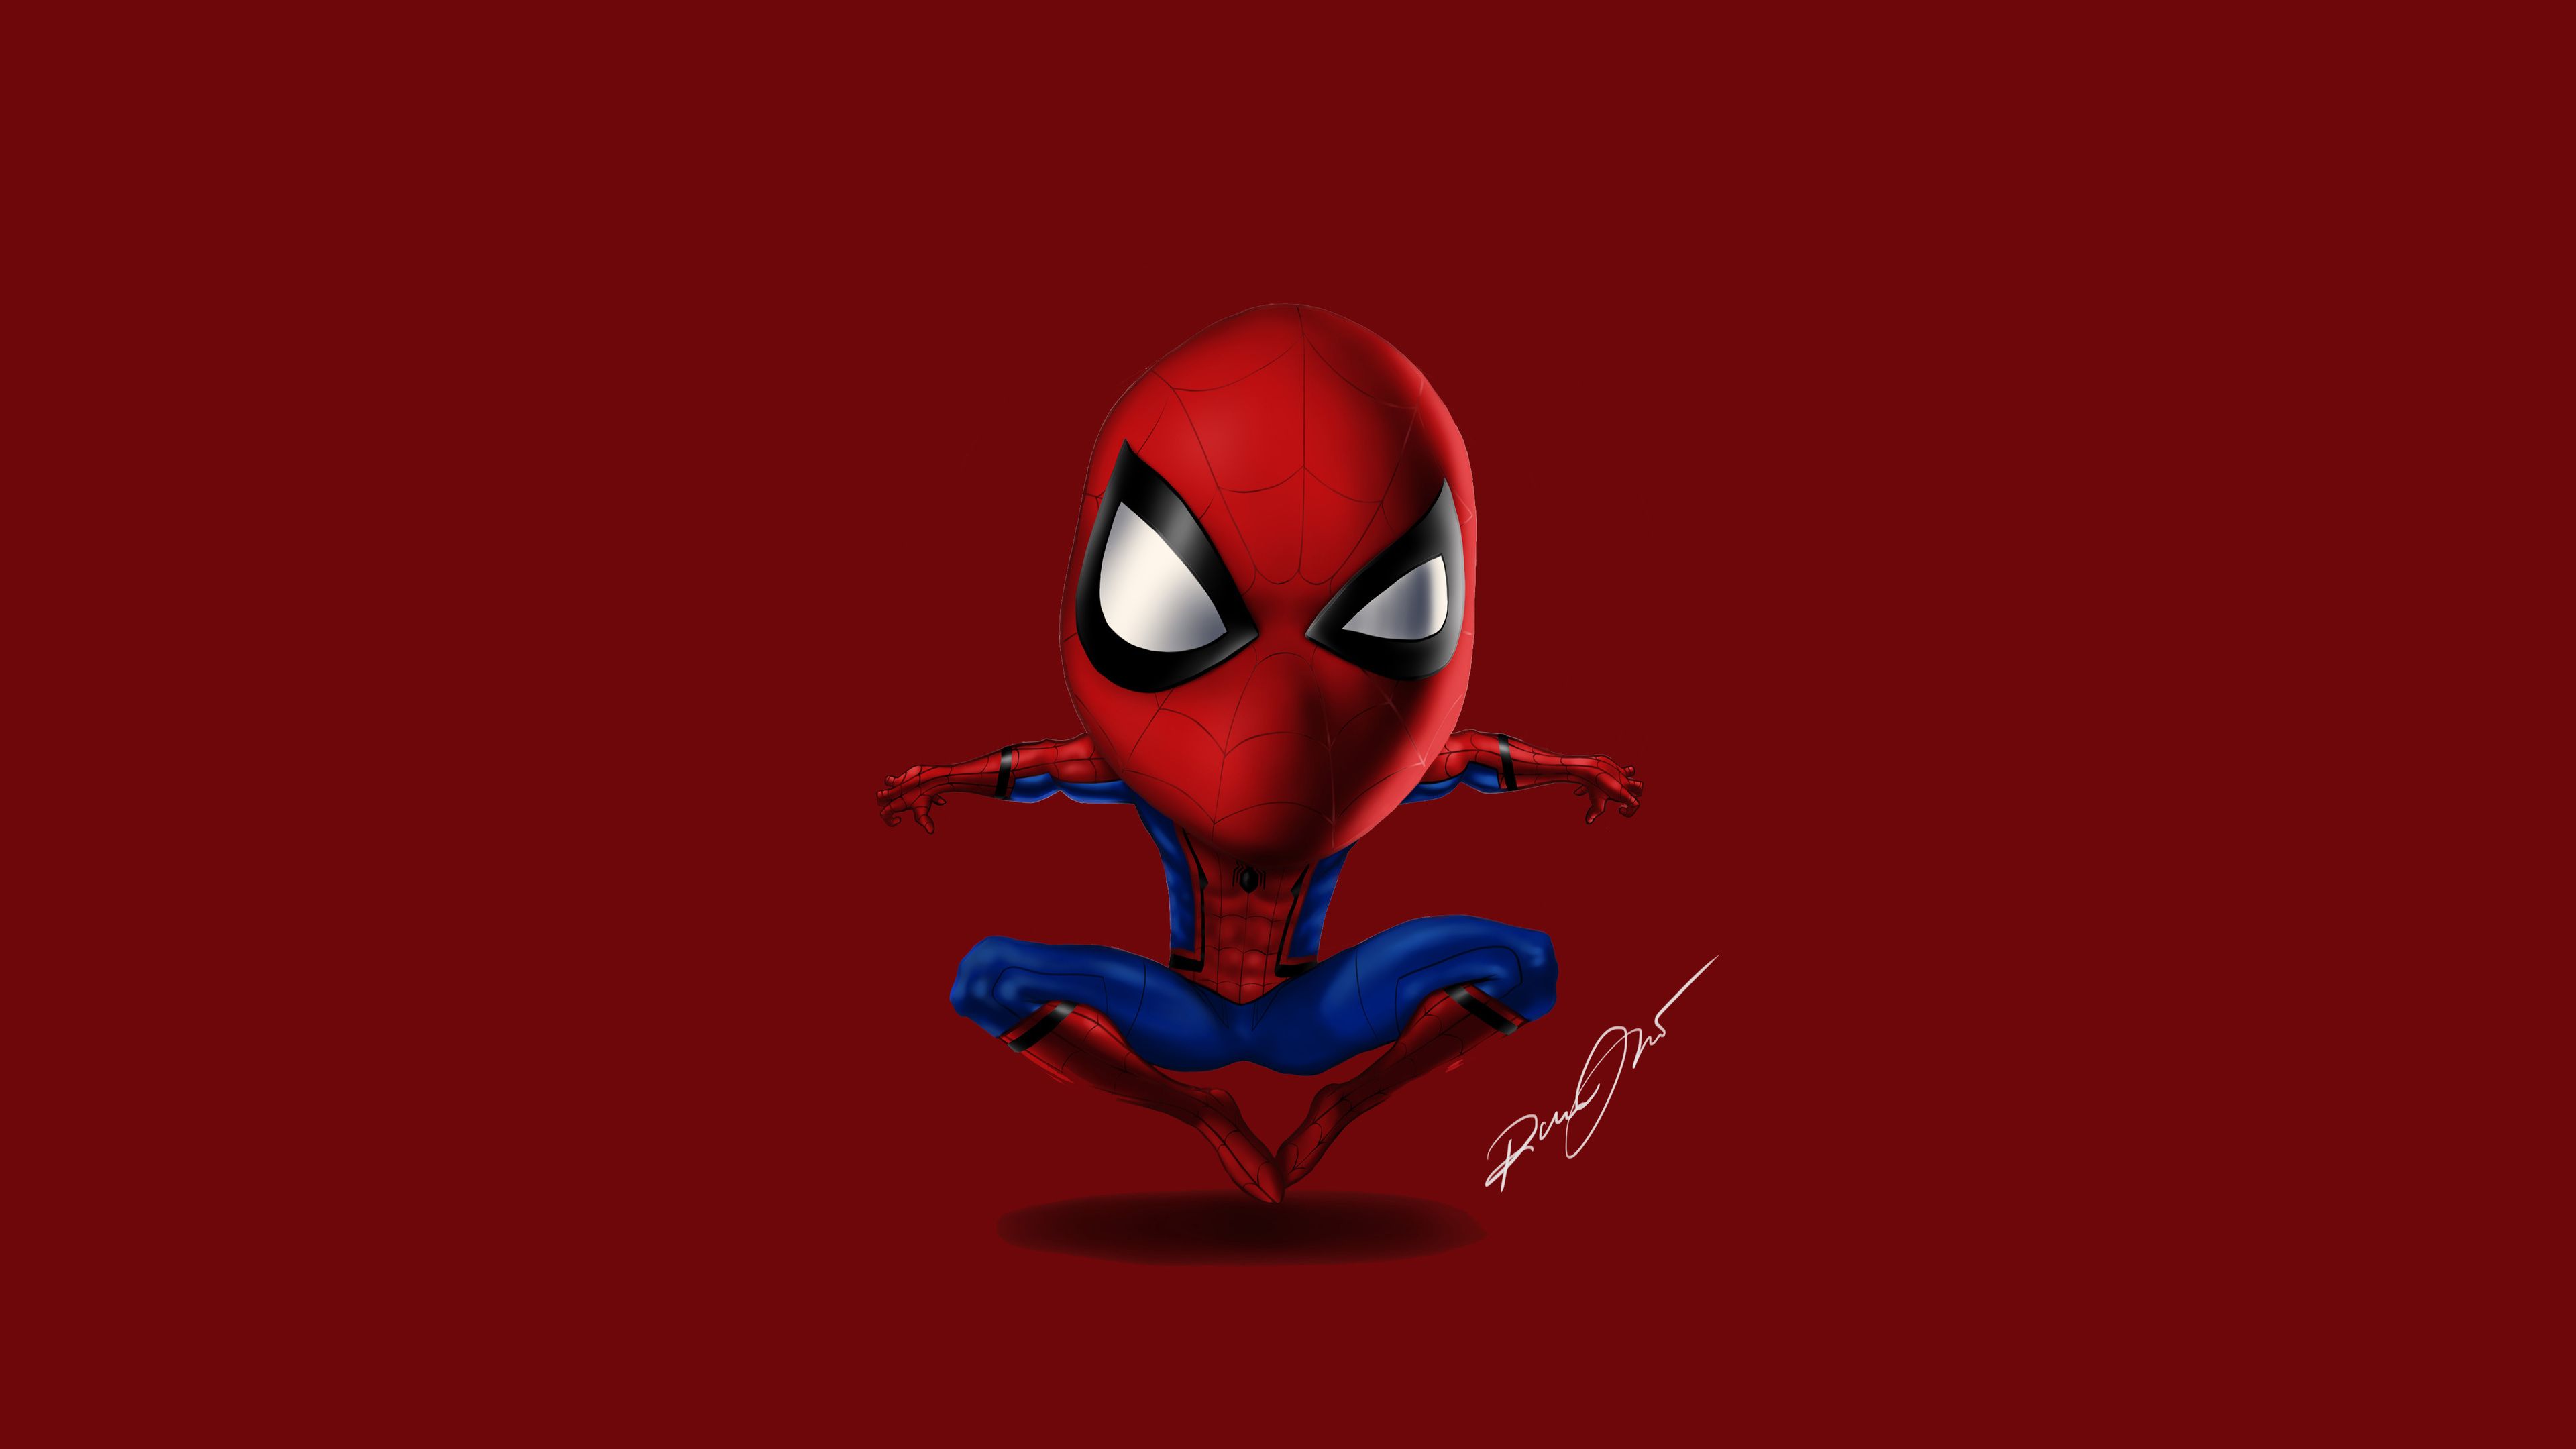 Spider Man Cartoon Desktop Wallpapers - Wallpaper Cave